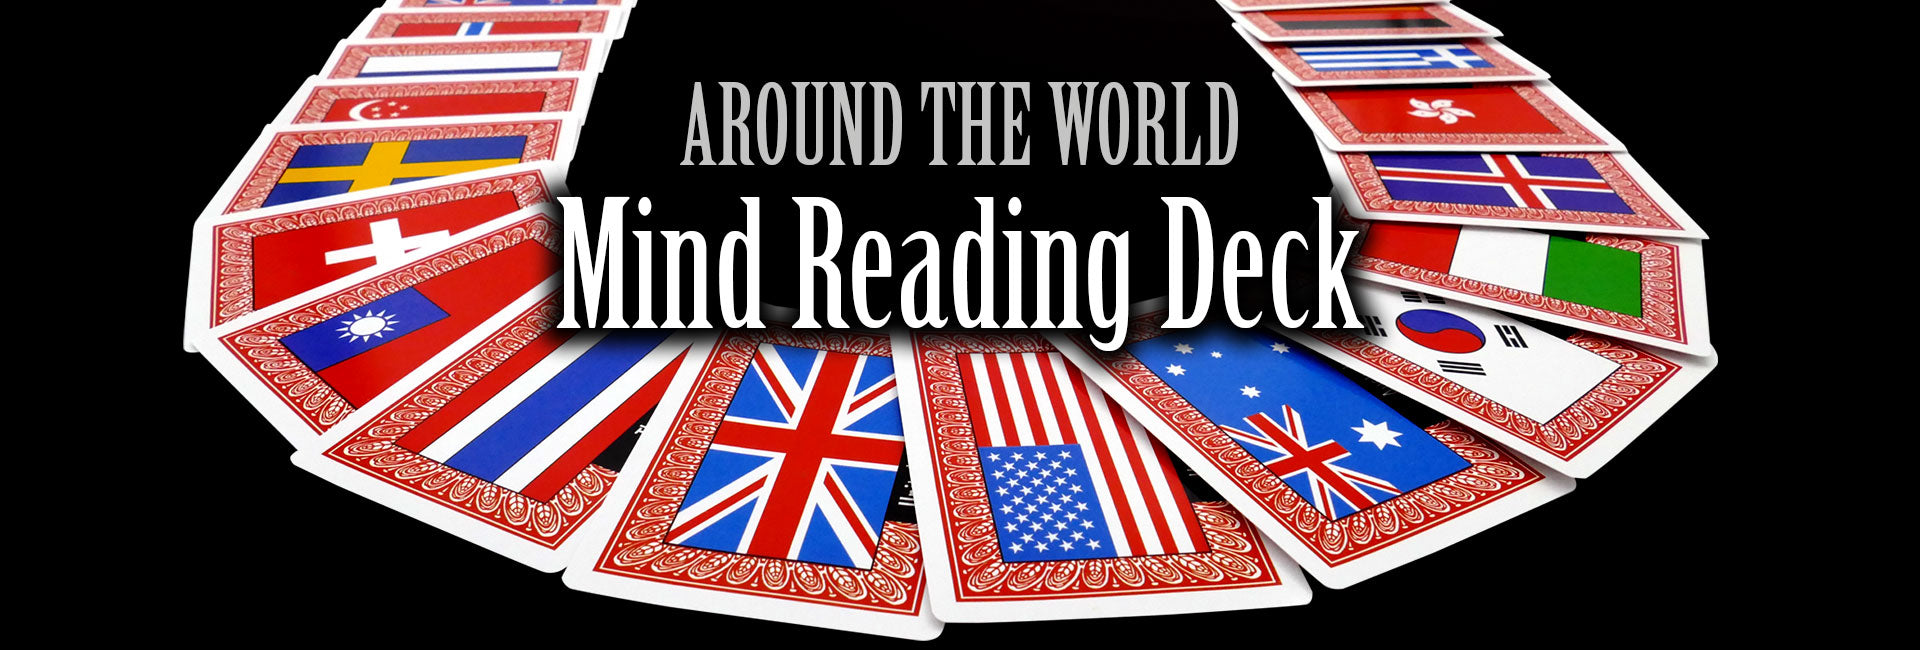 Around The World Mind Reading Magic Deck